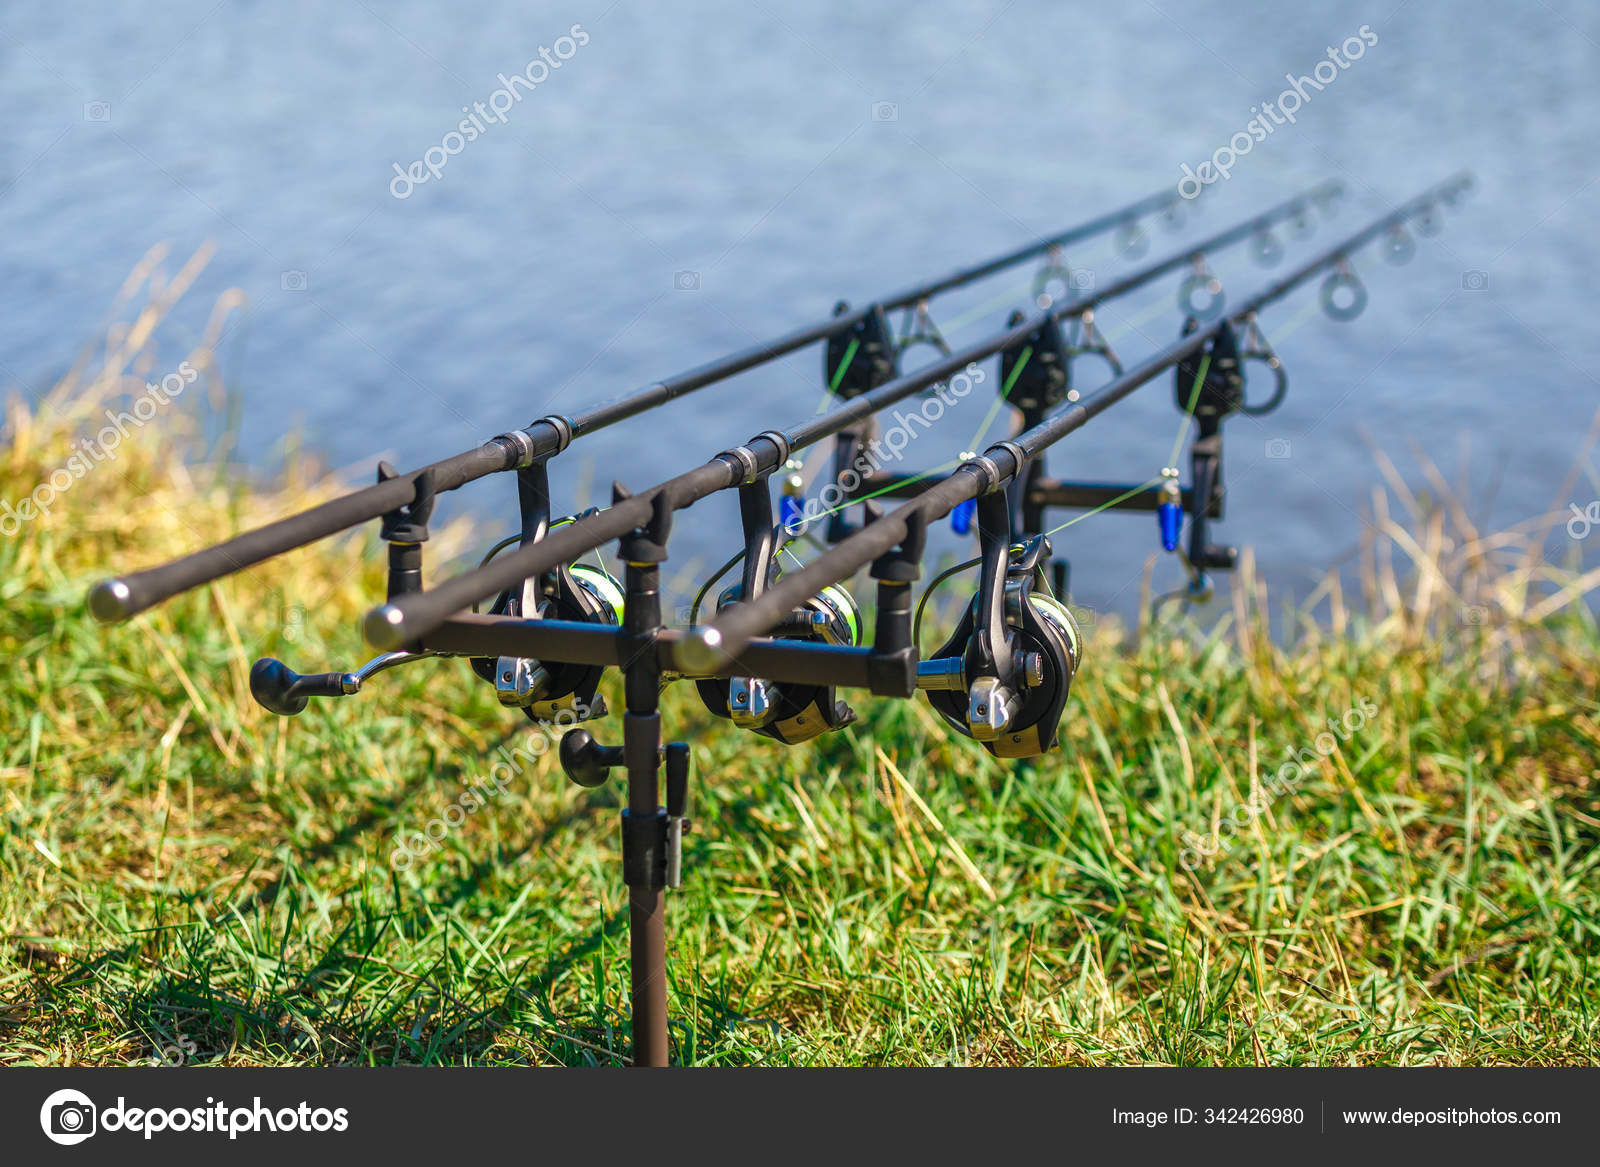 Aventuras de pesca, pesca de carpas. Cañas de pescar de carpa montadas en  ho: fotografía de stock © bukhta79 #342426980